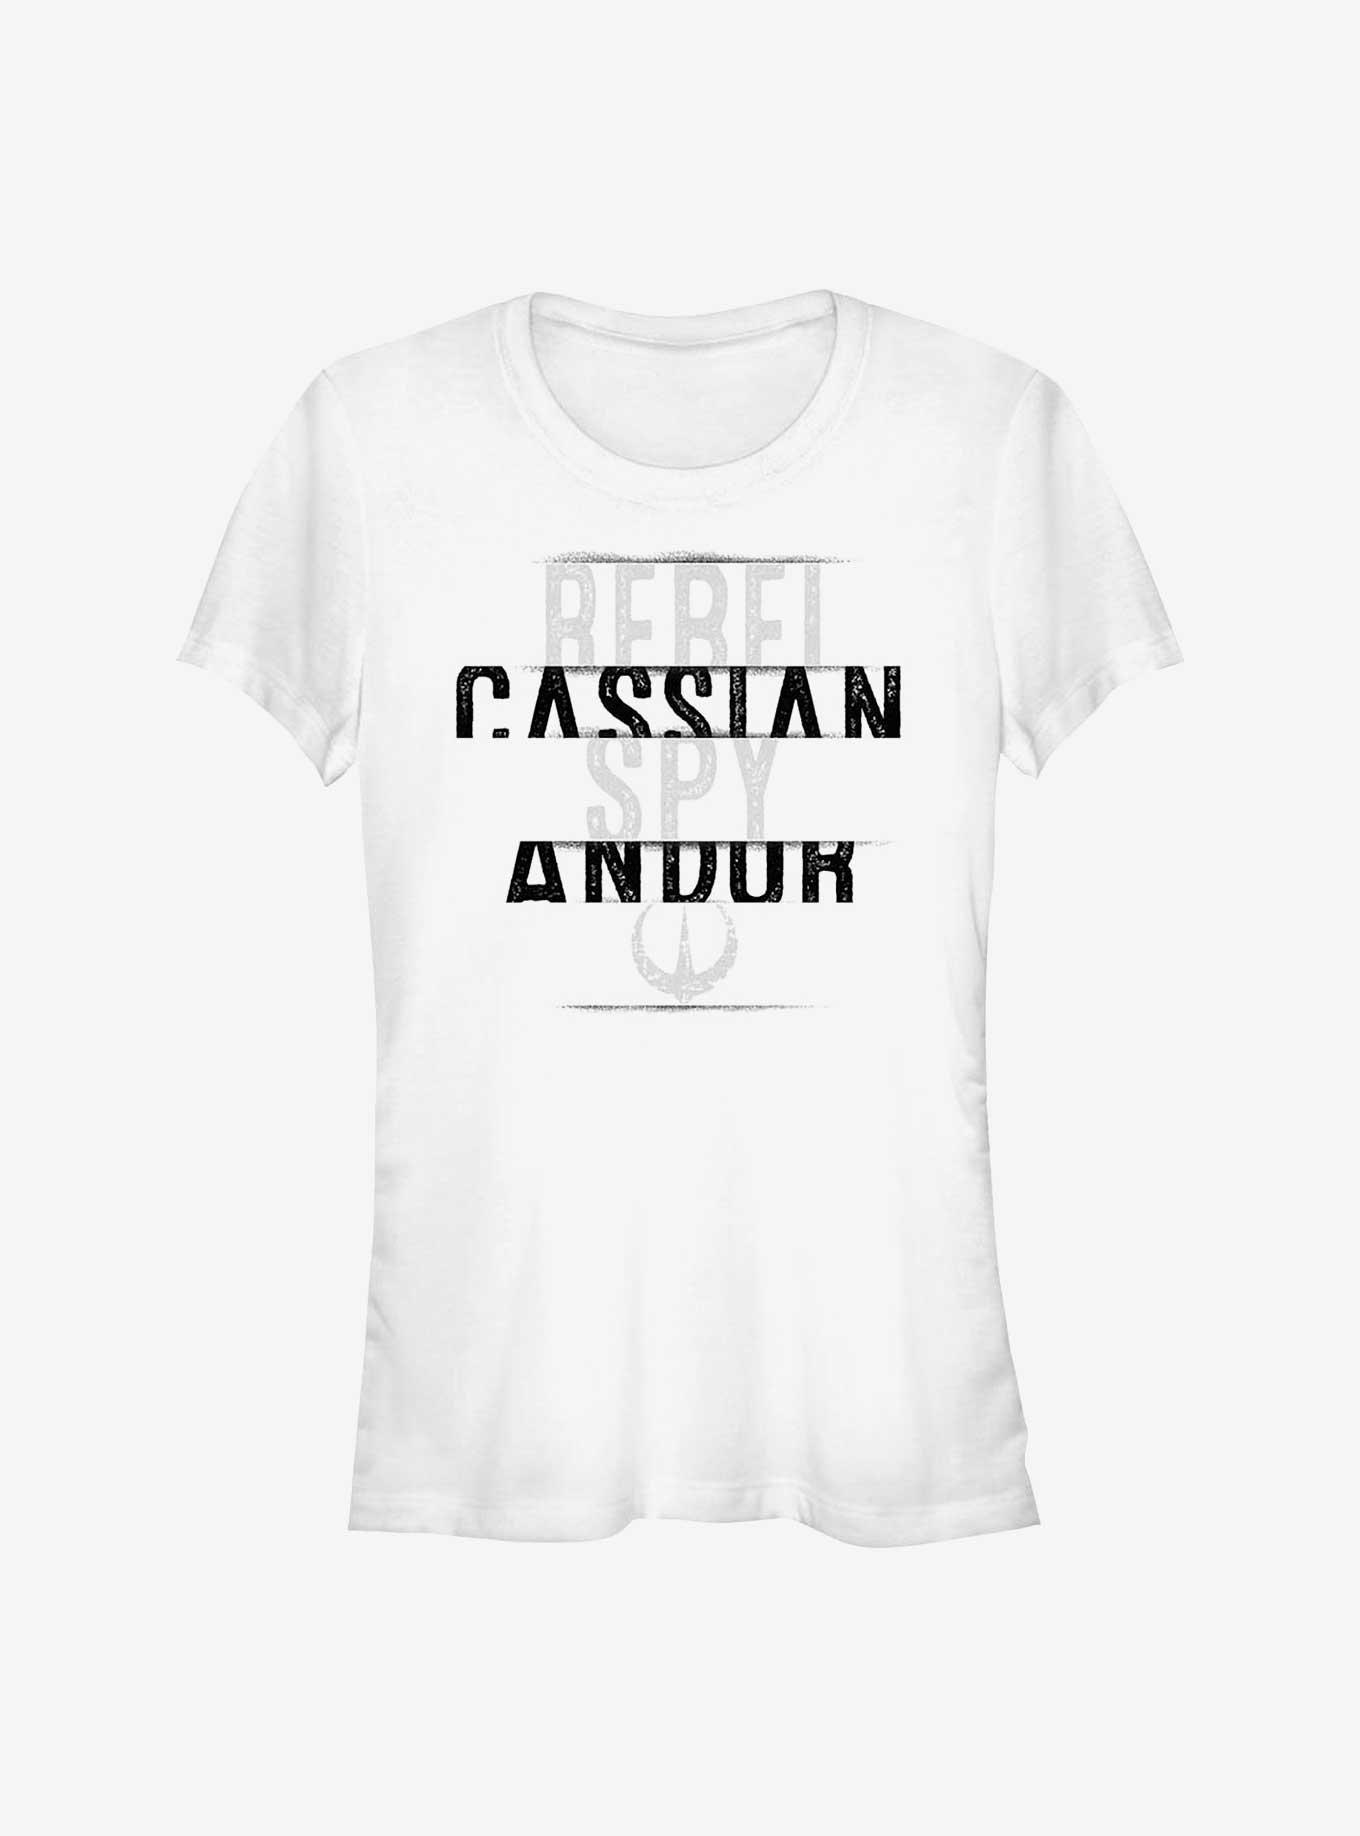 Star Wars: Andor Rebel Spy Cassian Girls T-Shirt